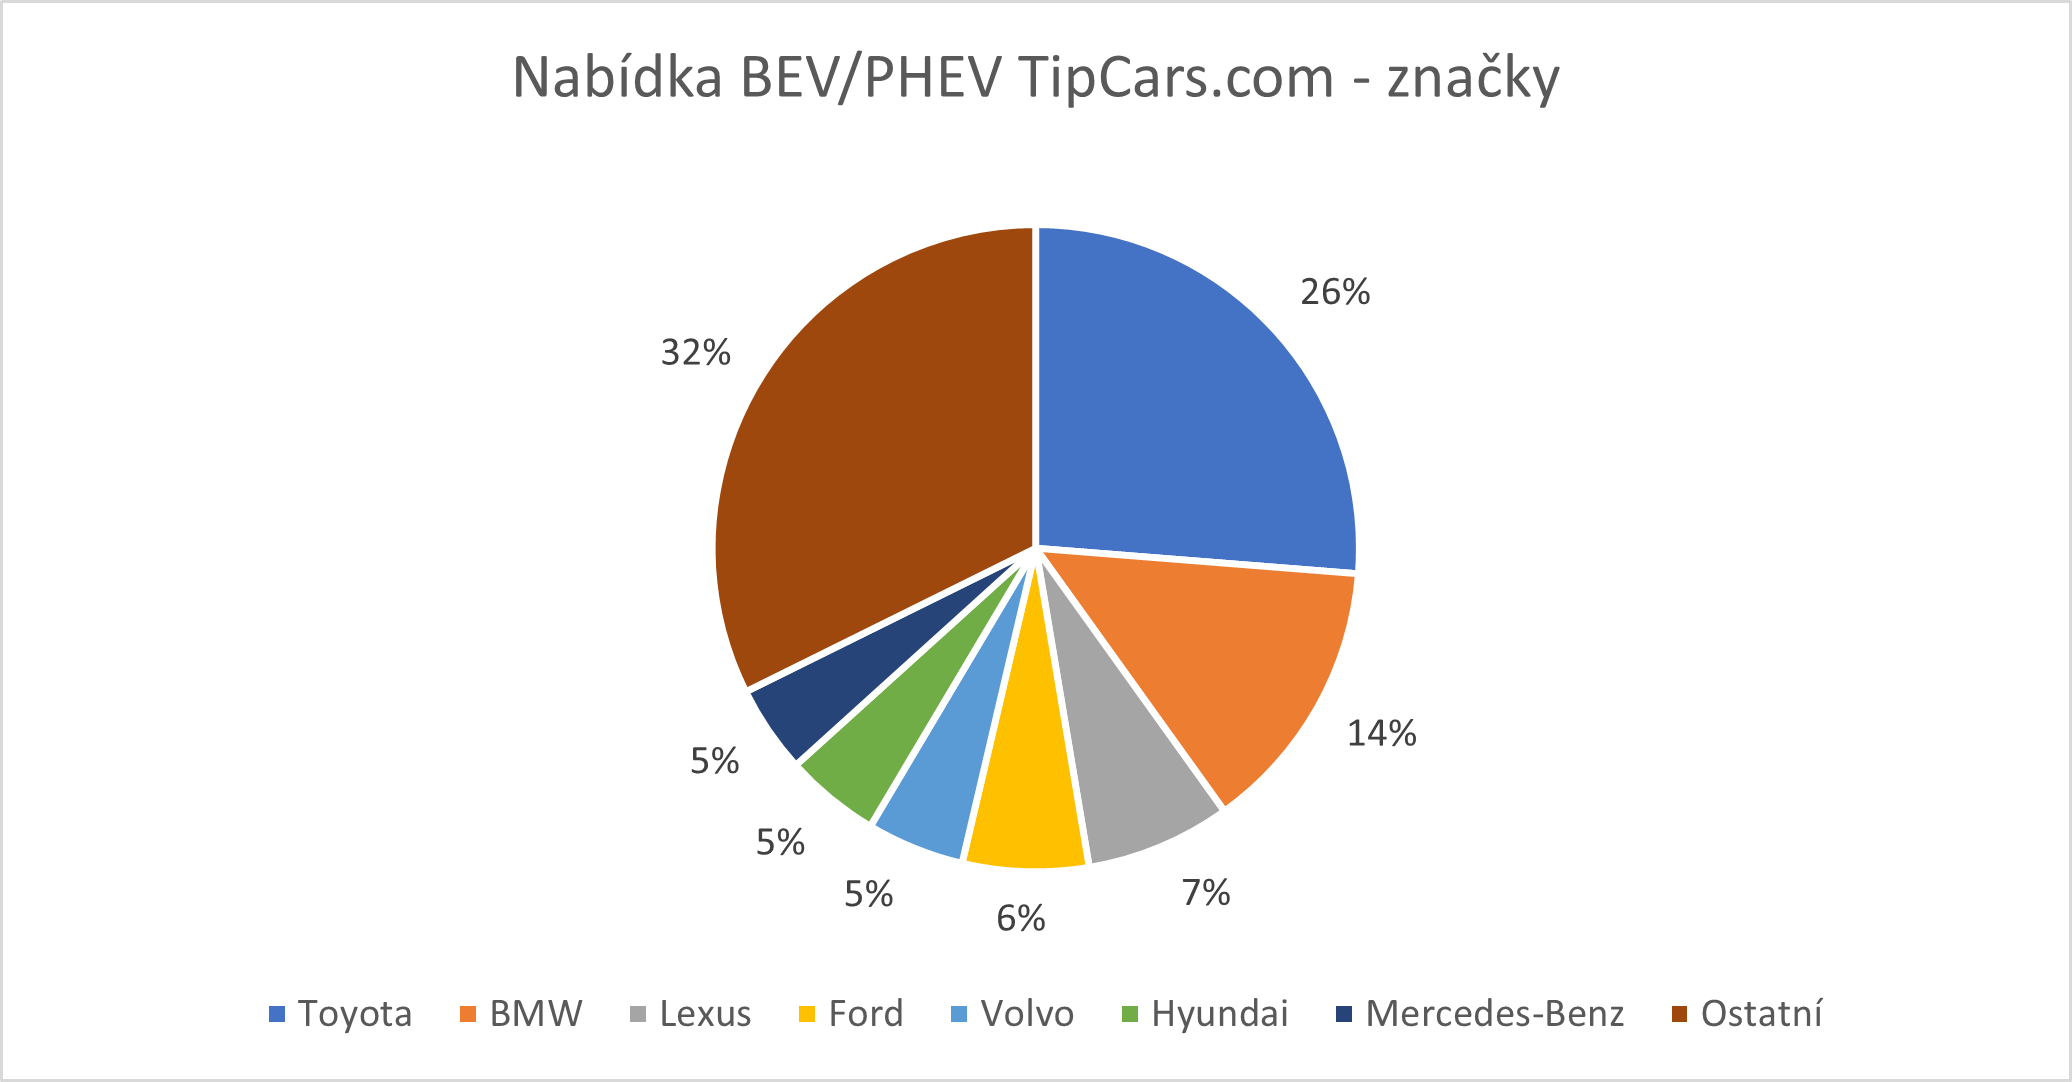 Nabidka-BEV-PHEV-znacky_TipCars